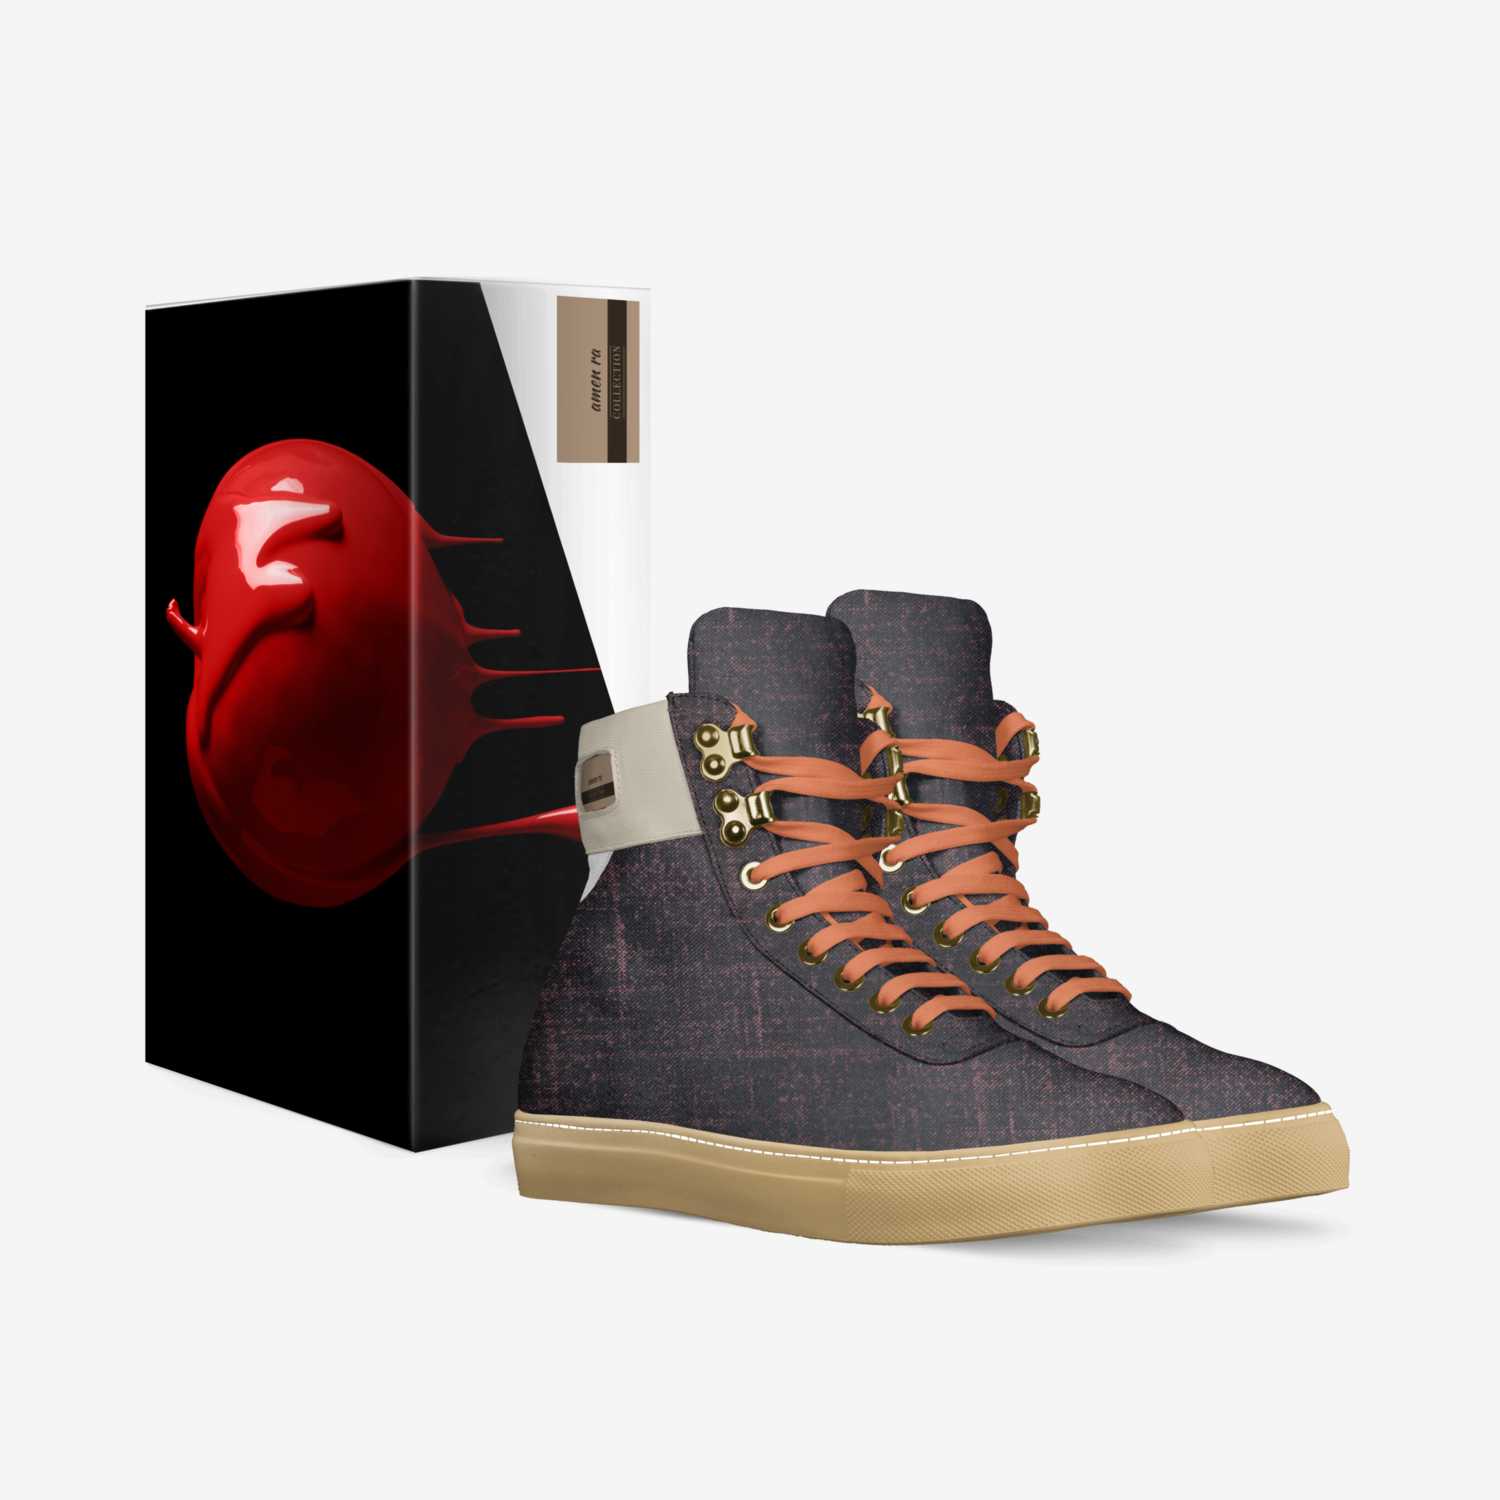 amen ra custom made in Italy shoes by Daryl Hayott | Box view